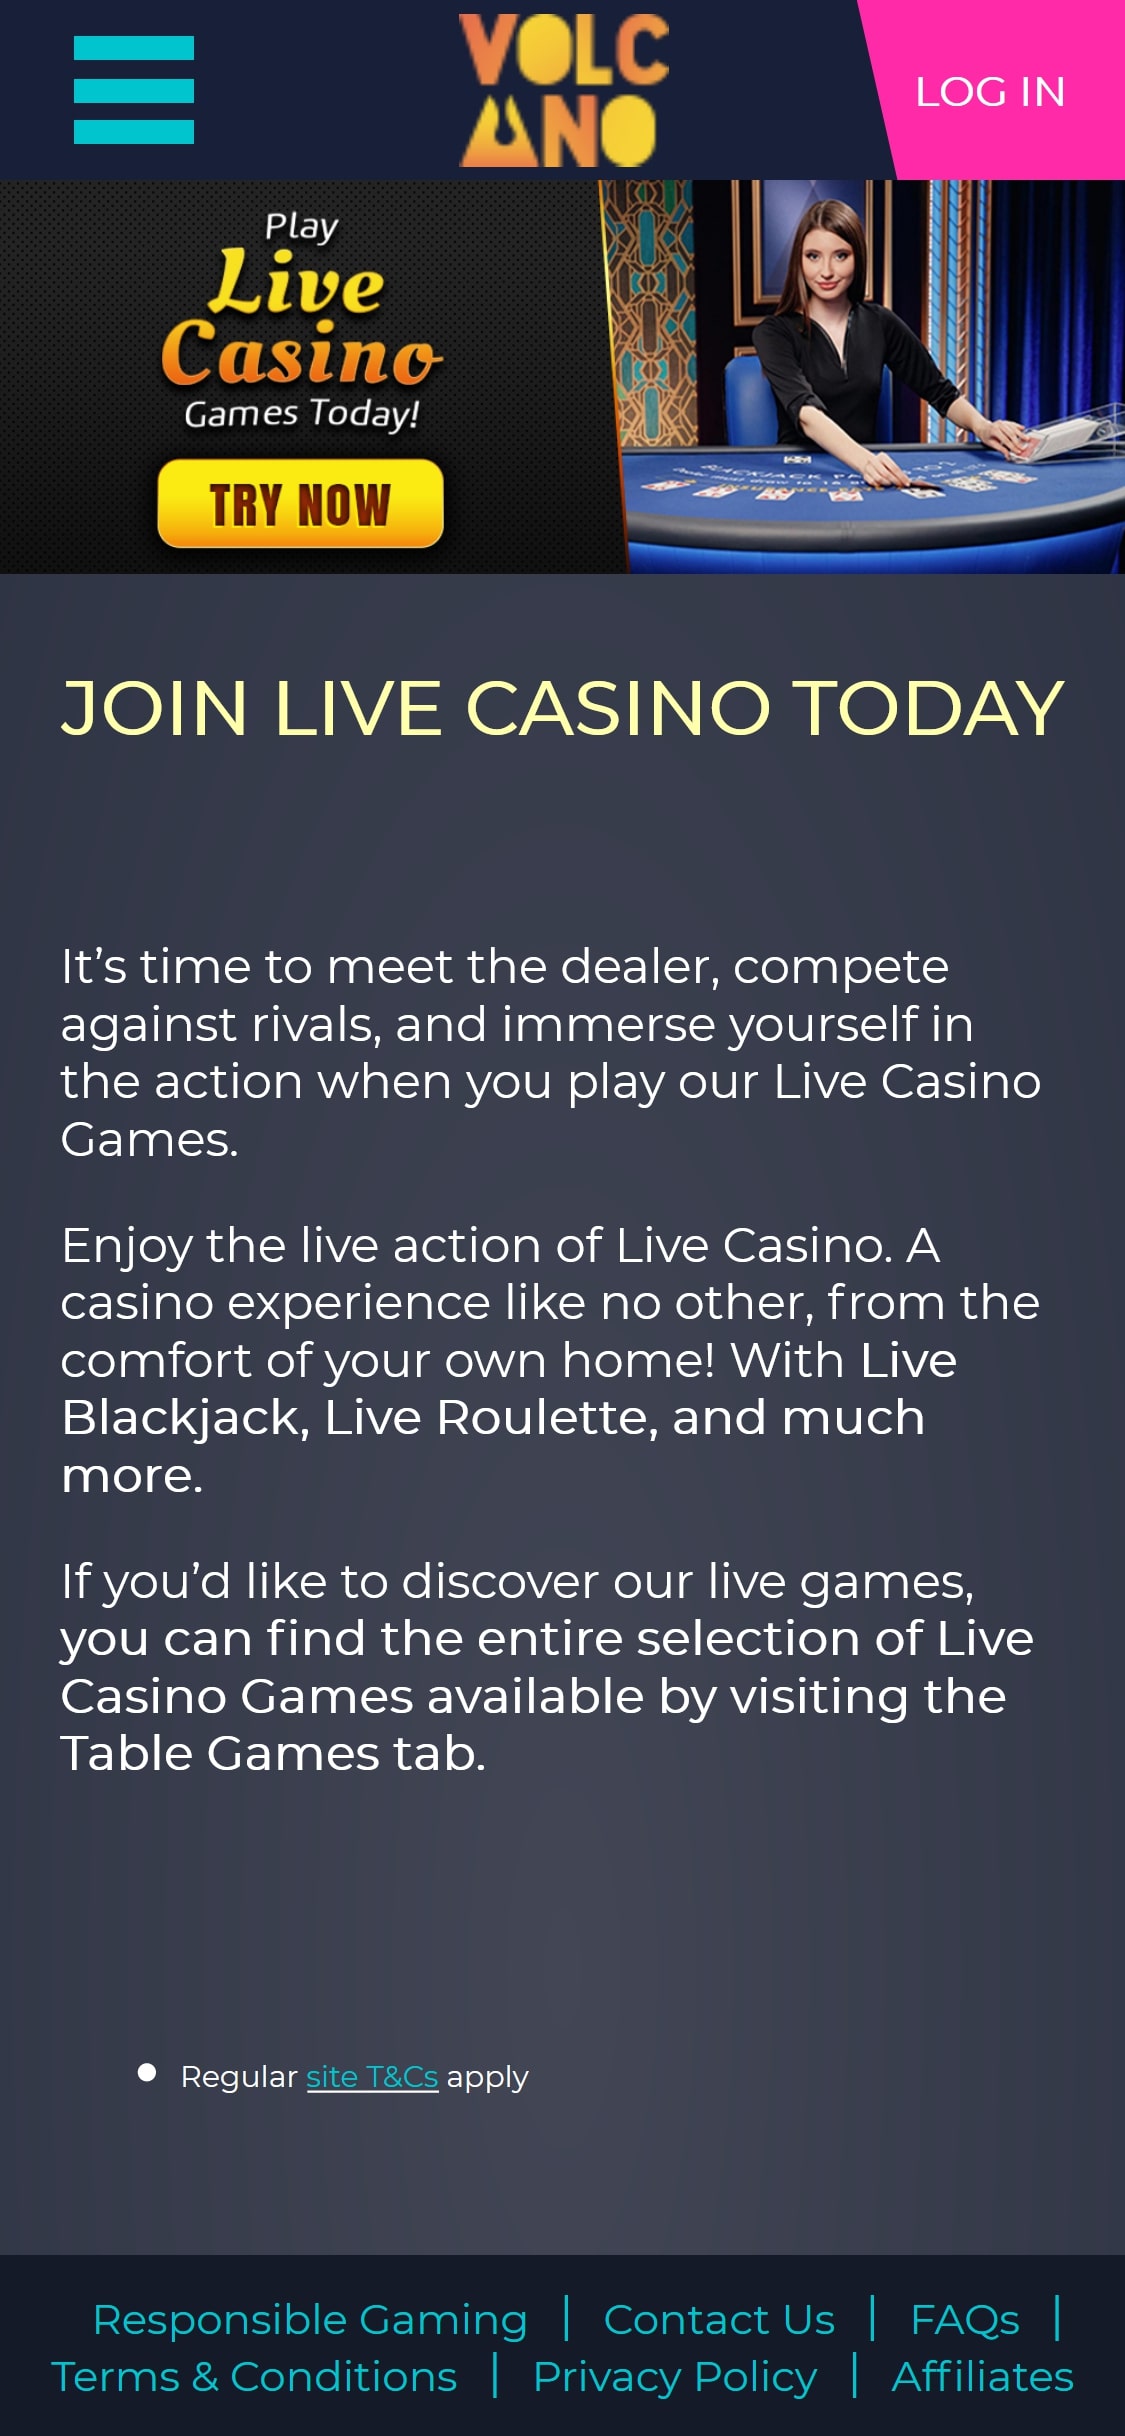 Volcano Bingo Casino Mobile Live Dealer Games Review